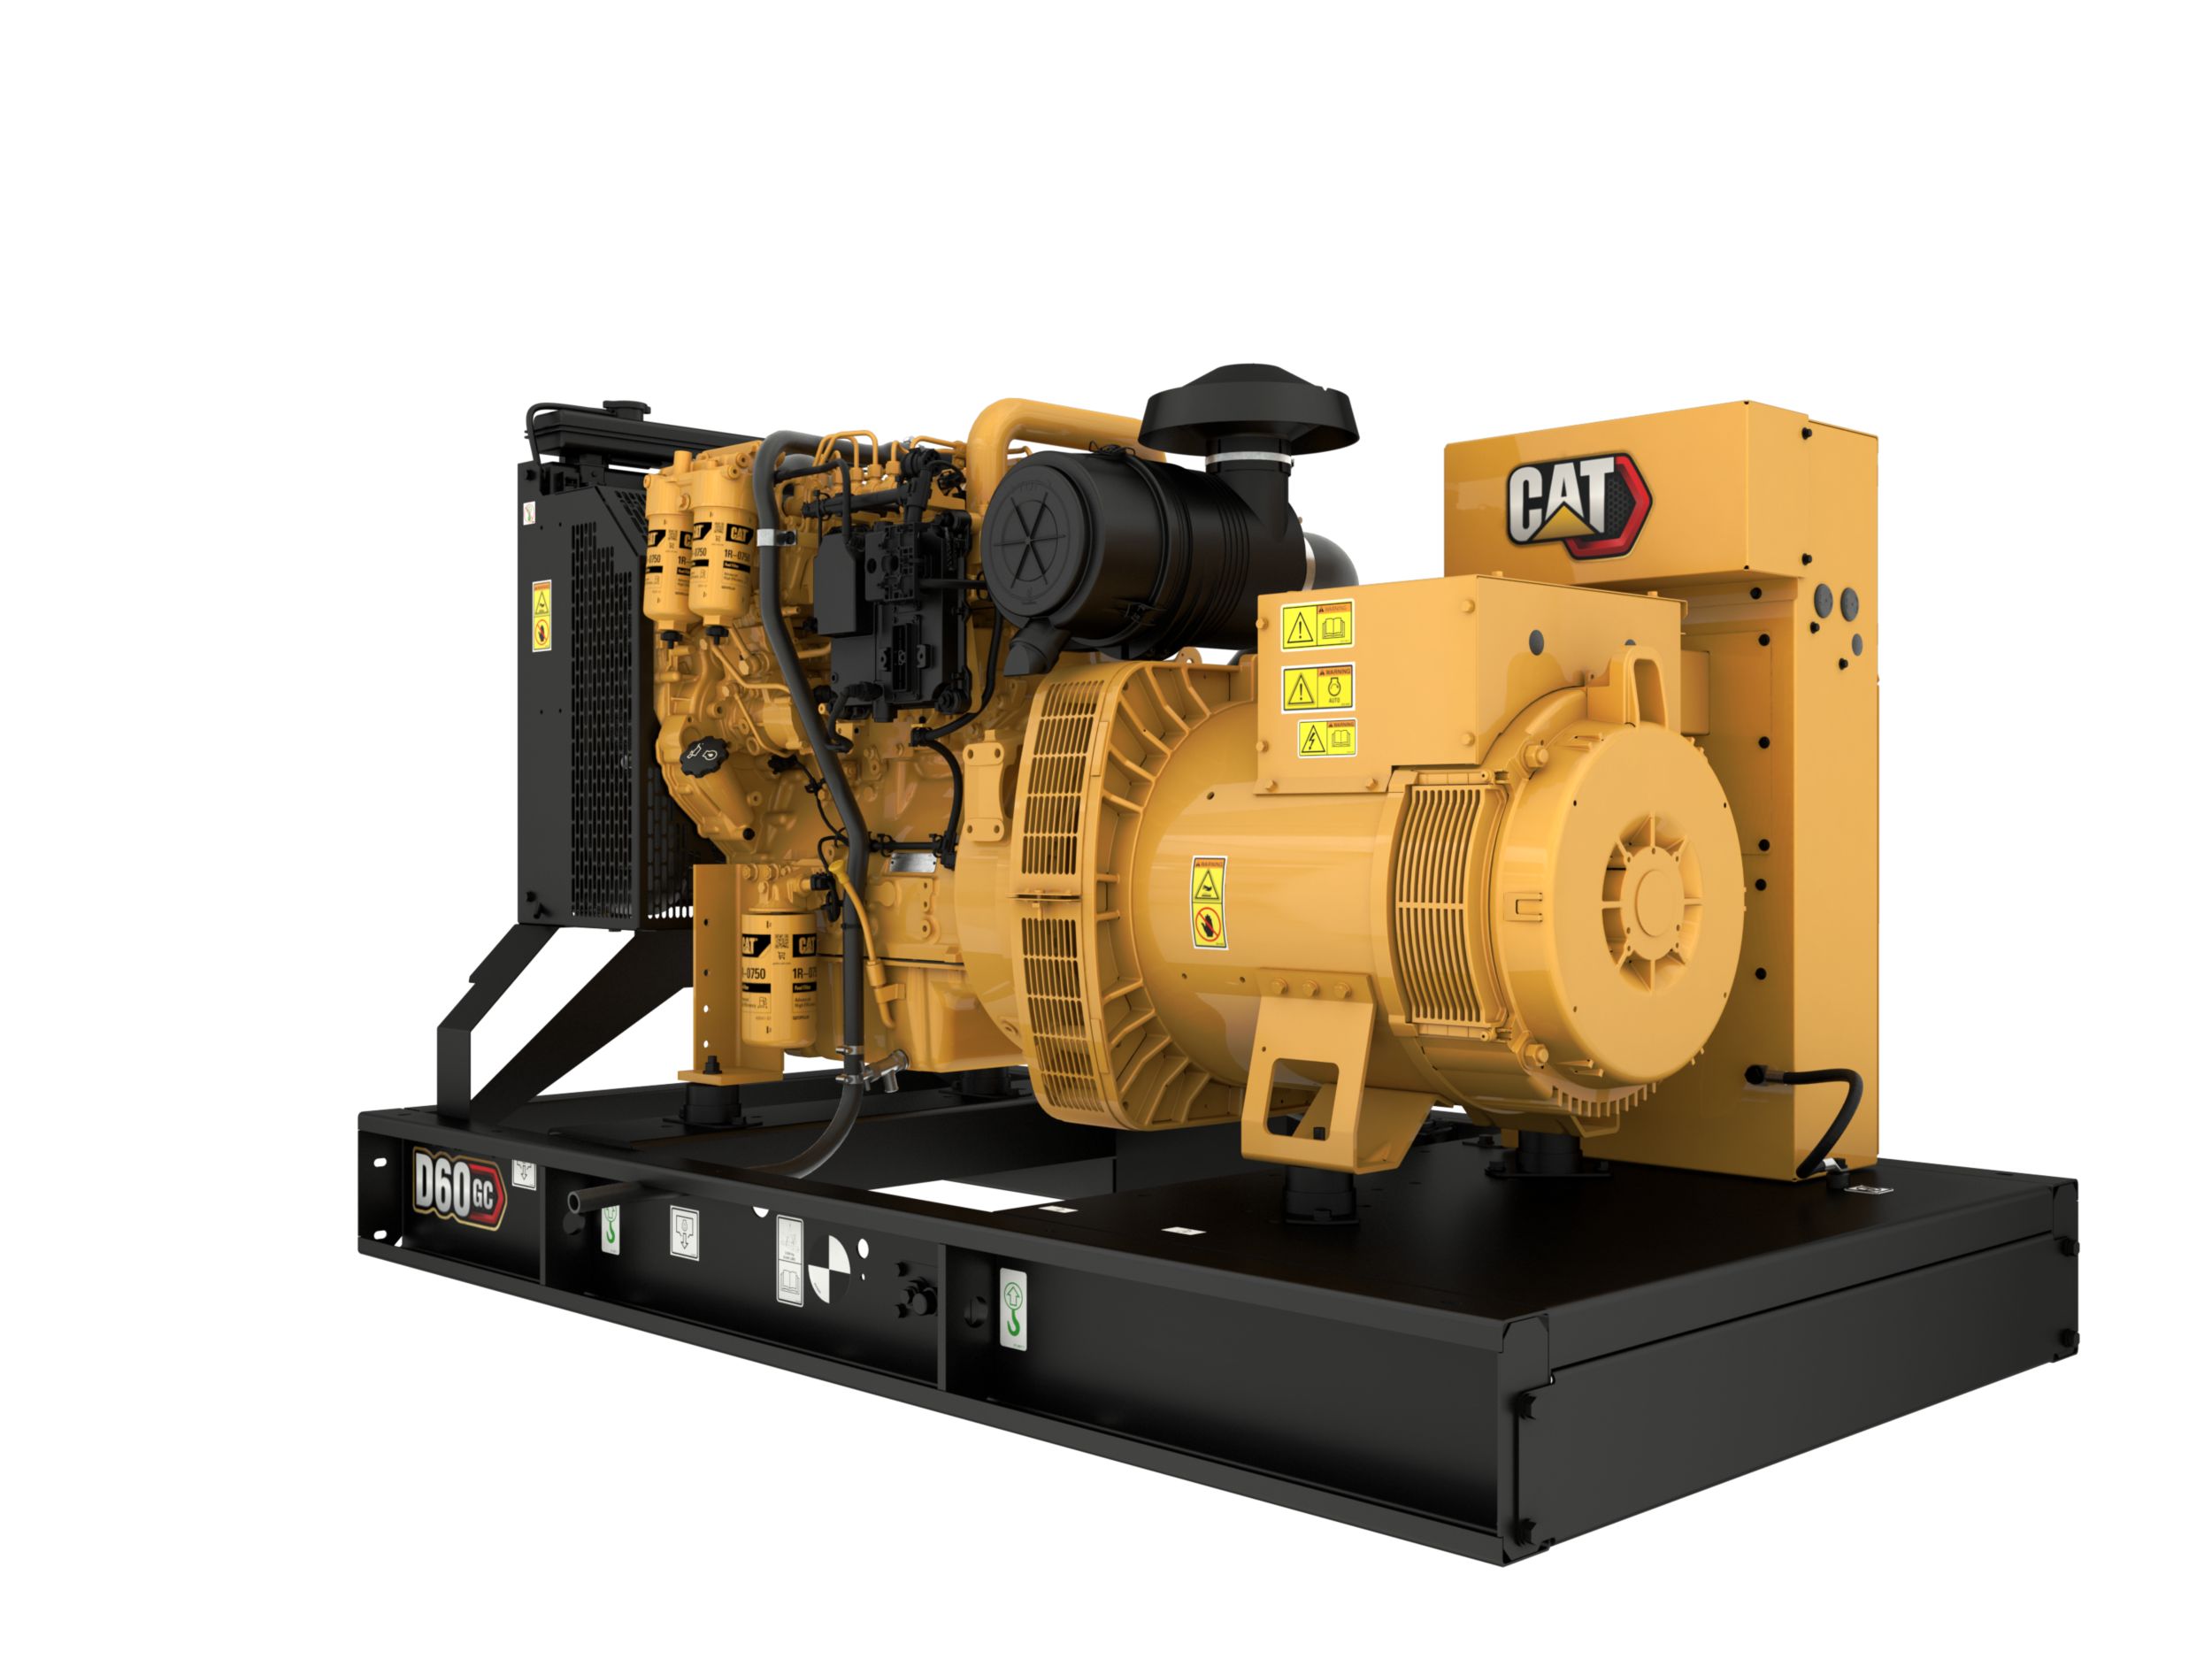 D60 GC Generator Set